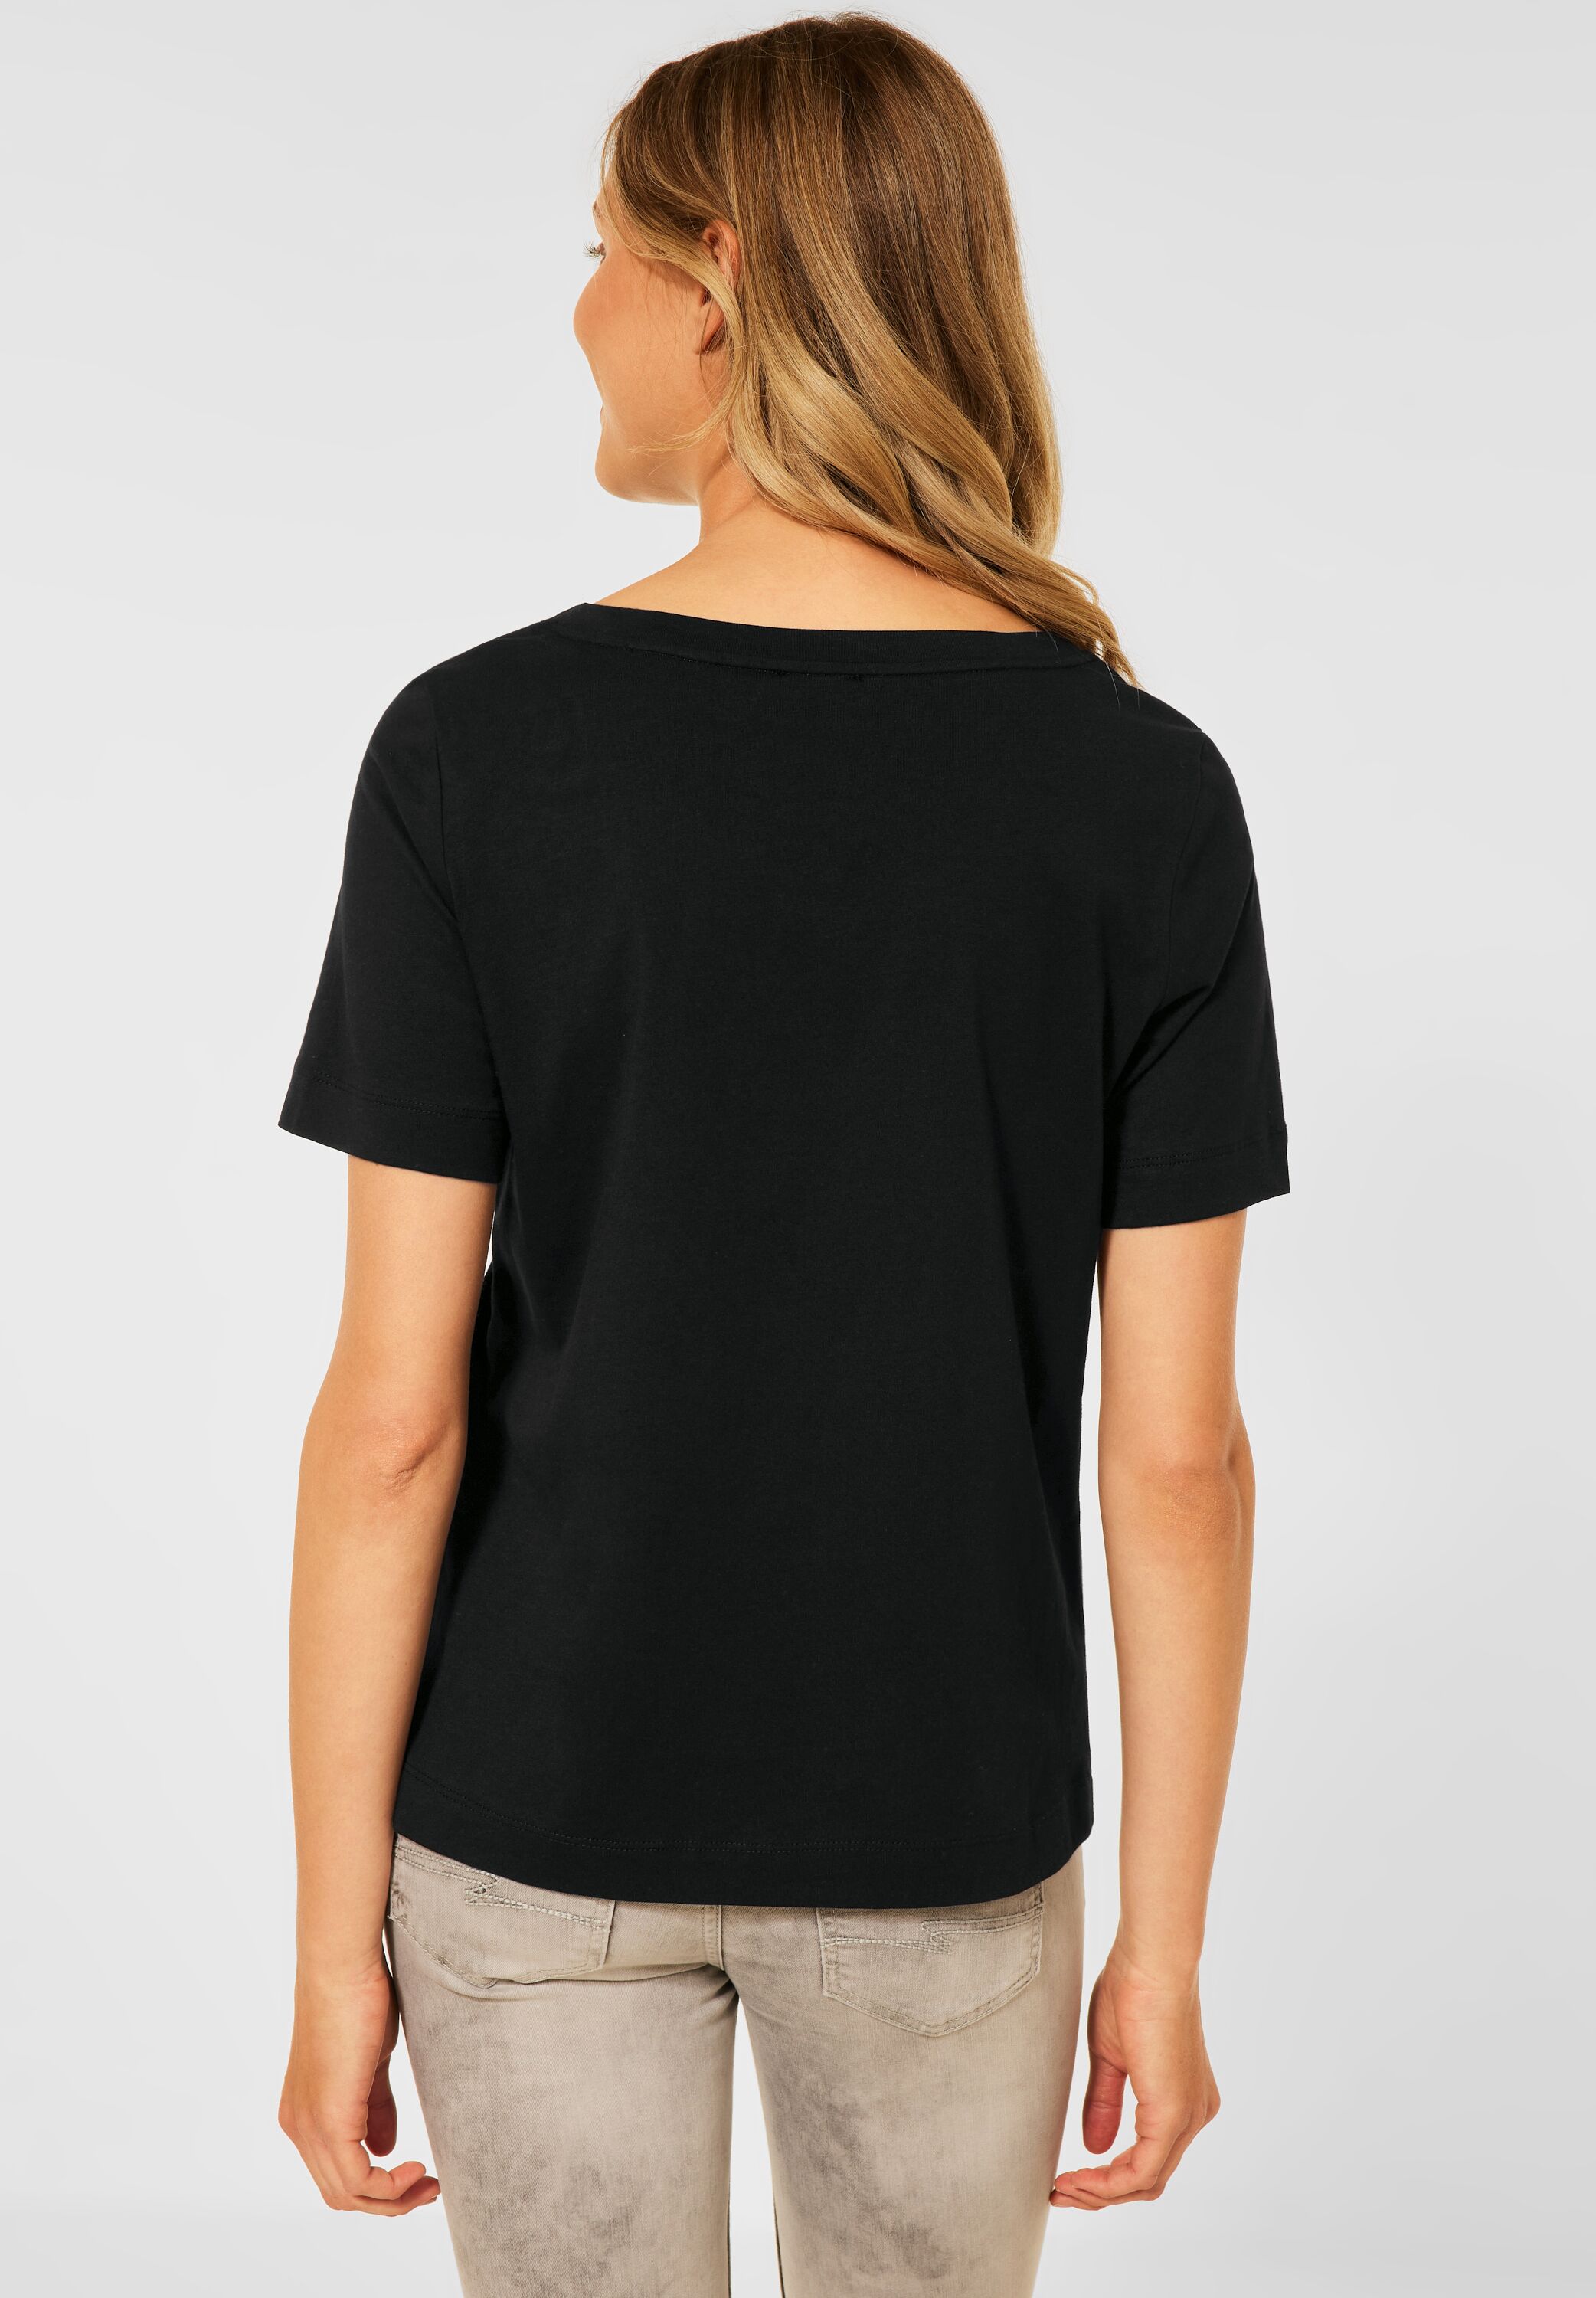 Street One T-Shirt in Black im SALE reduziert A318363-20001 - CONCEPT Mode